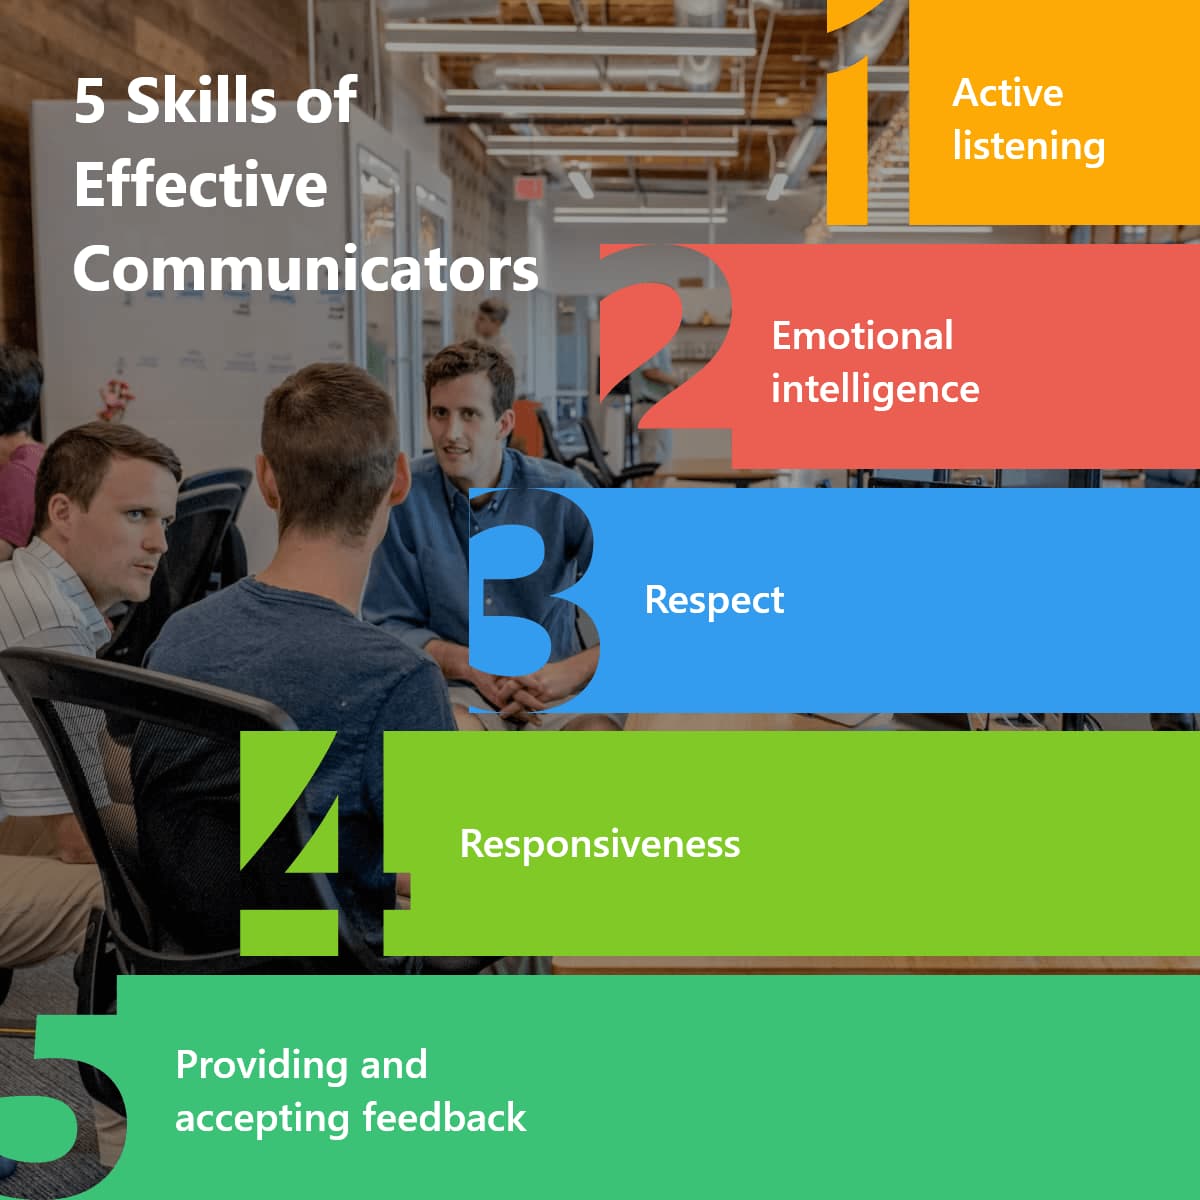 5 skills of effective communicators